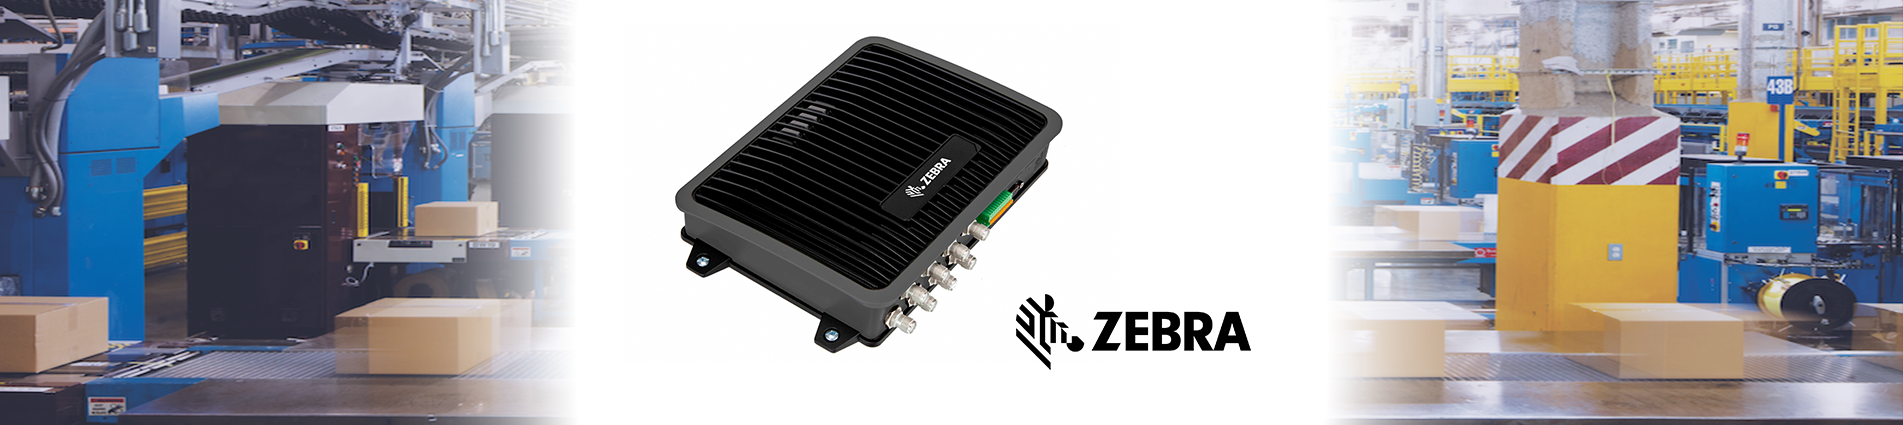 Zebra FX9600 8 Port RFID Okuyucu